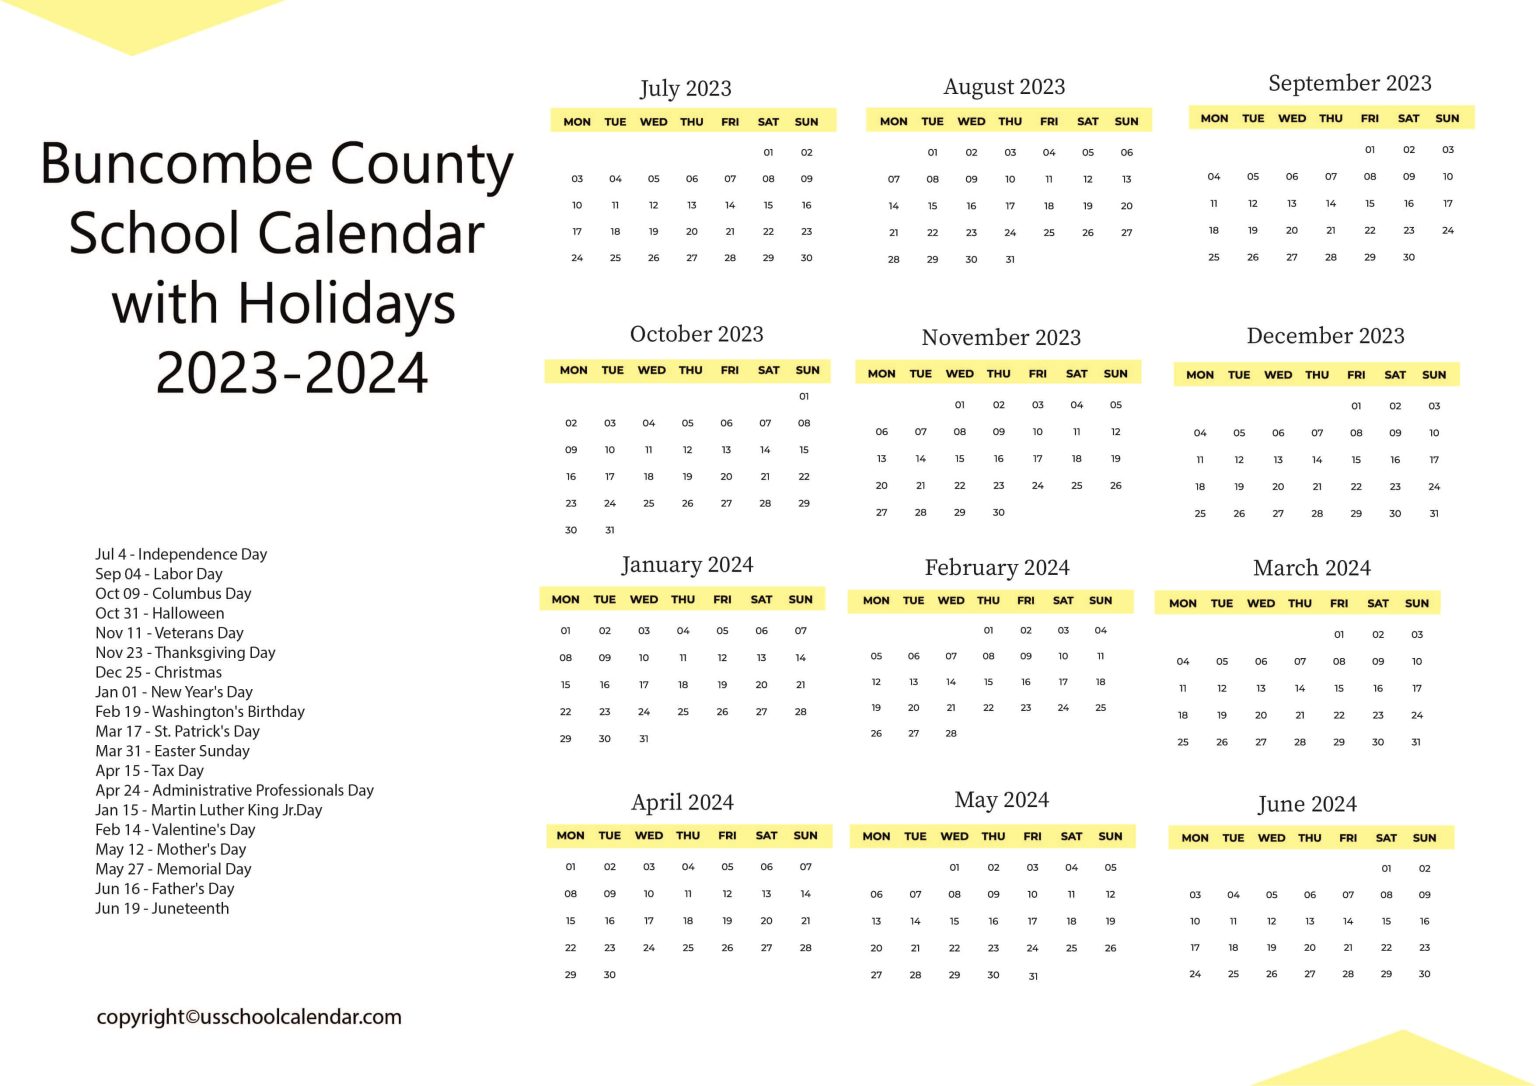 Buncombe County School Calendar with Holidays 2023-2024